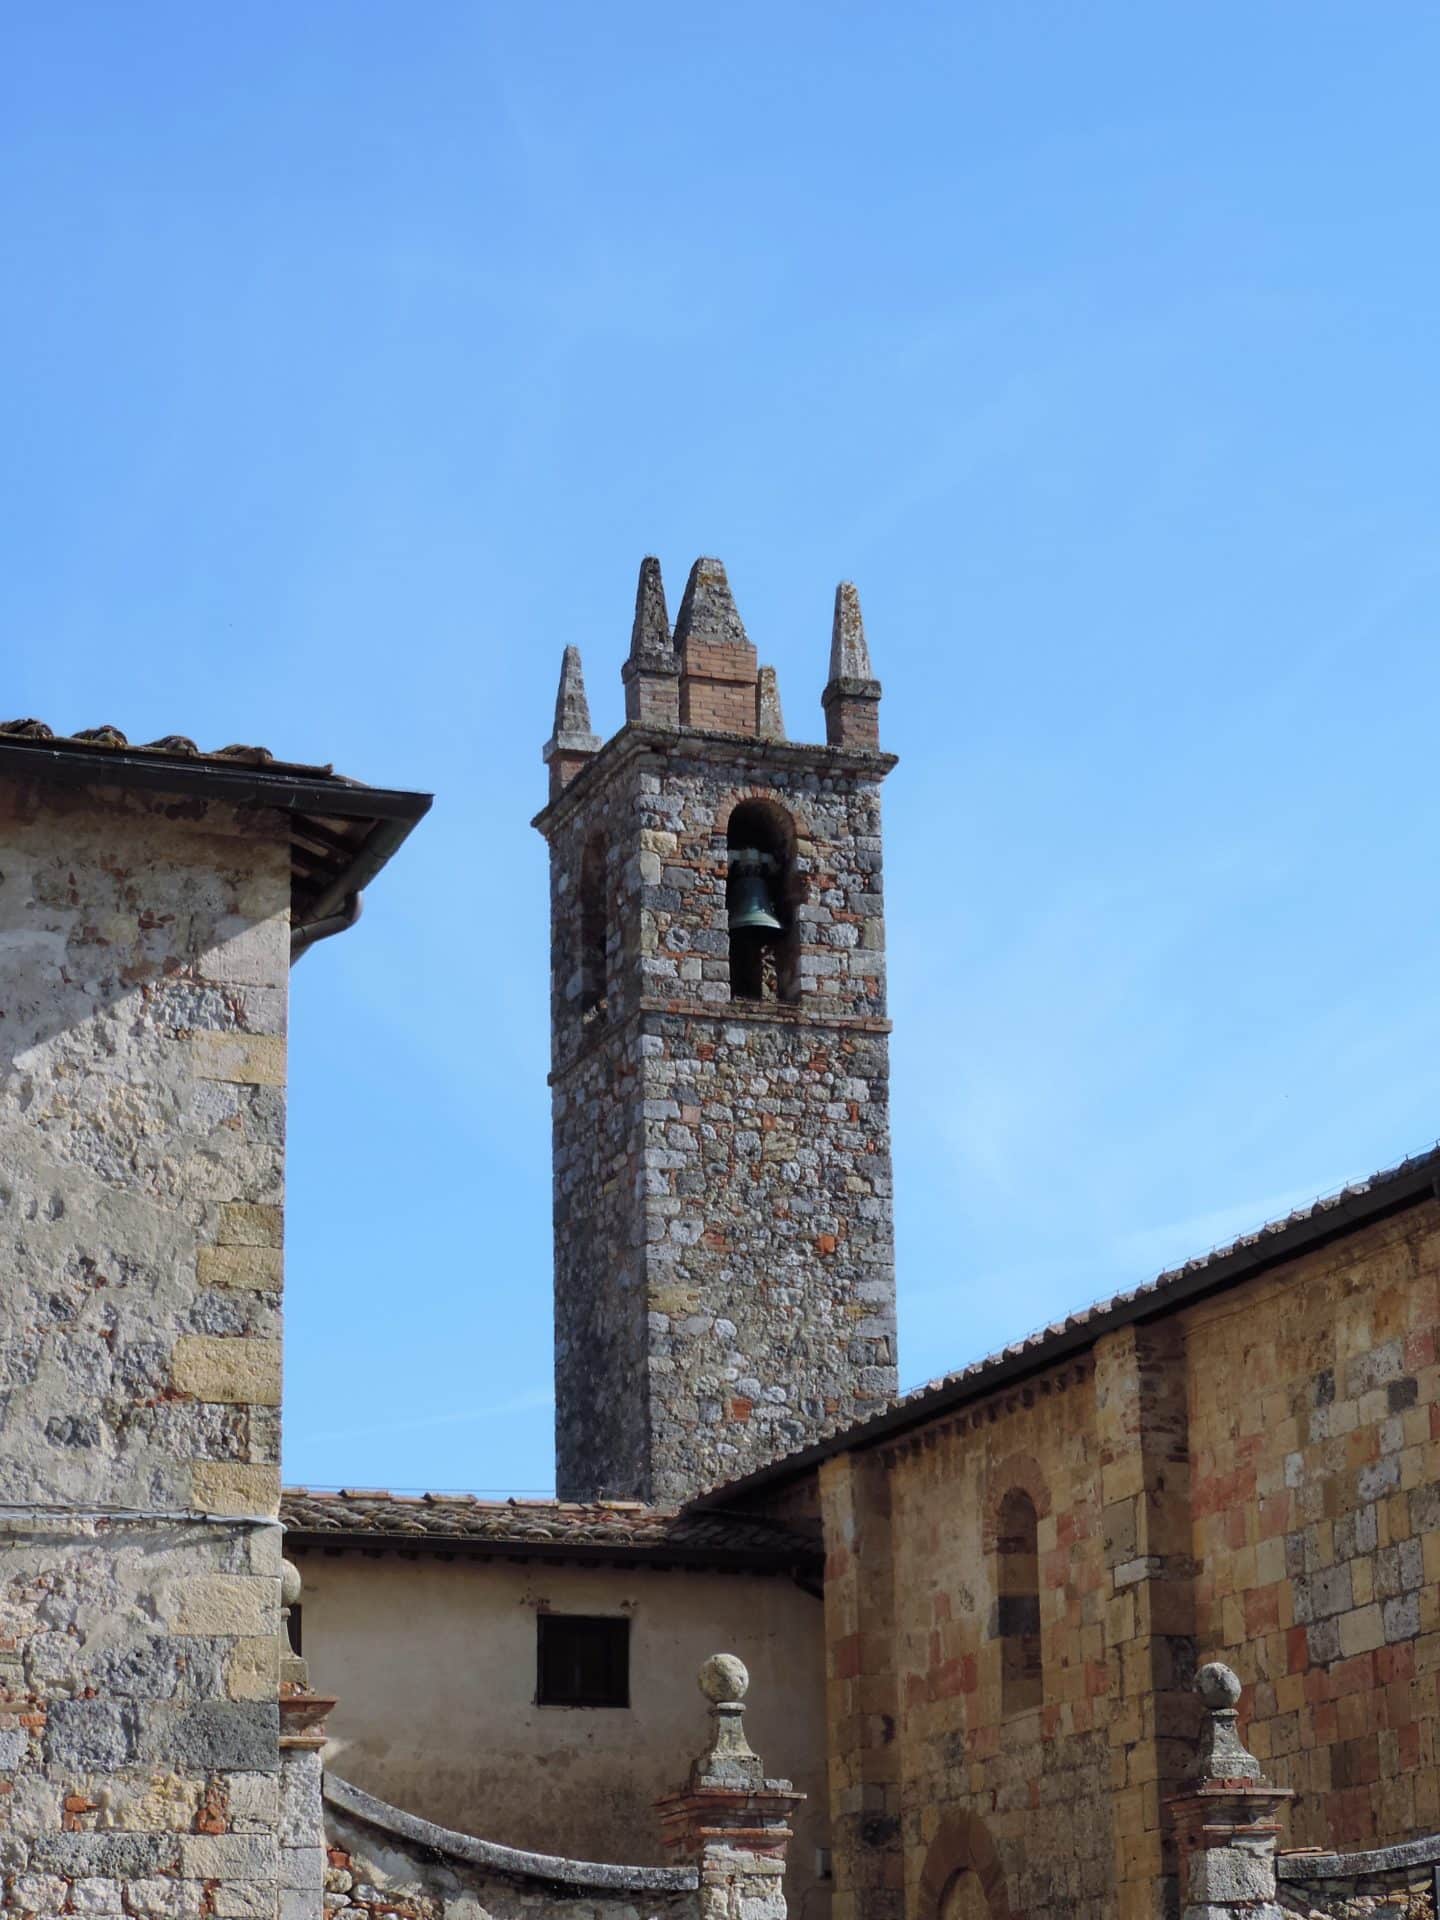 Tuscany's Medieval Towns, Monteriggioni